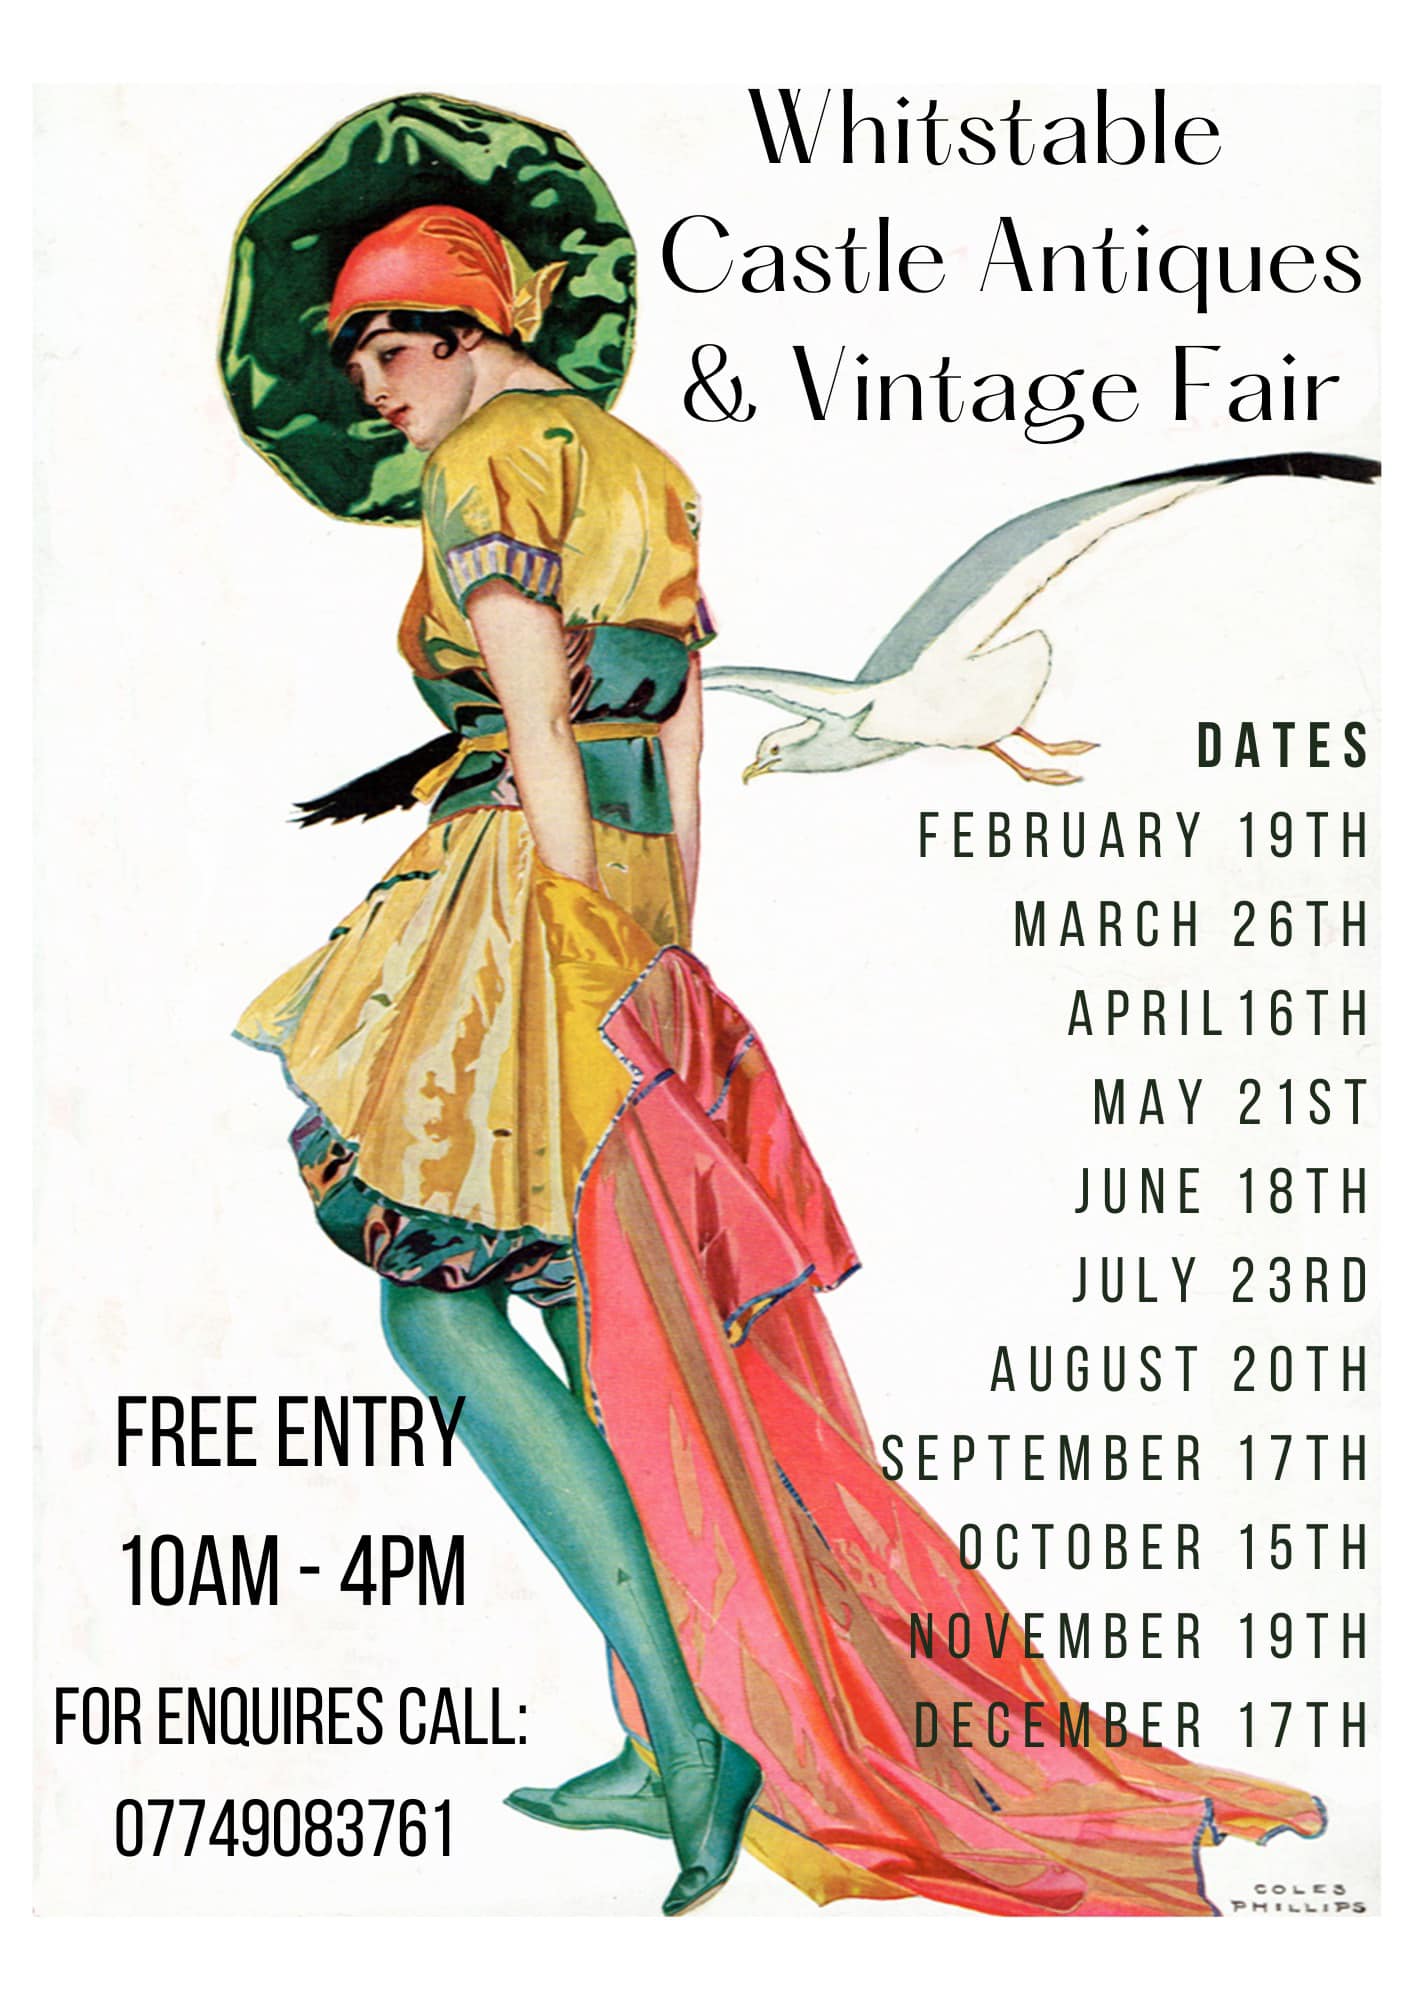 Antiques & Vintage Fair Whitstable Castle & Gardens